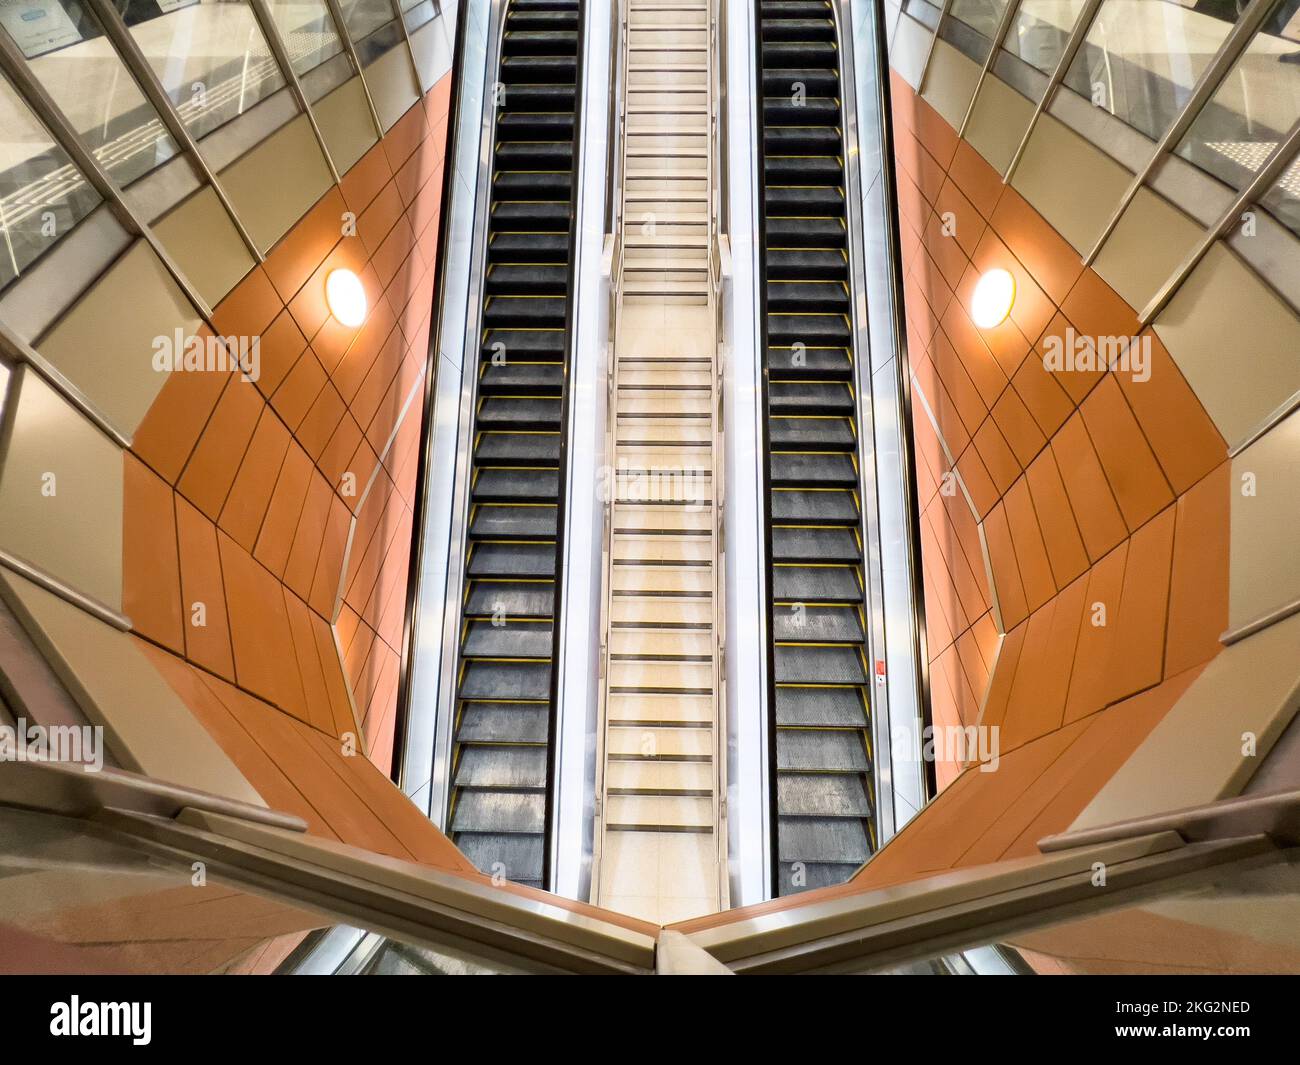 Long escalators in a symmetrical format. Stock Photo